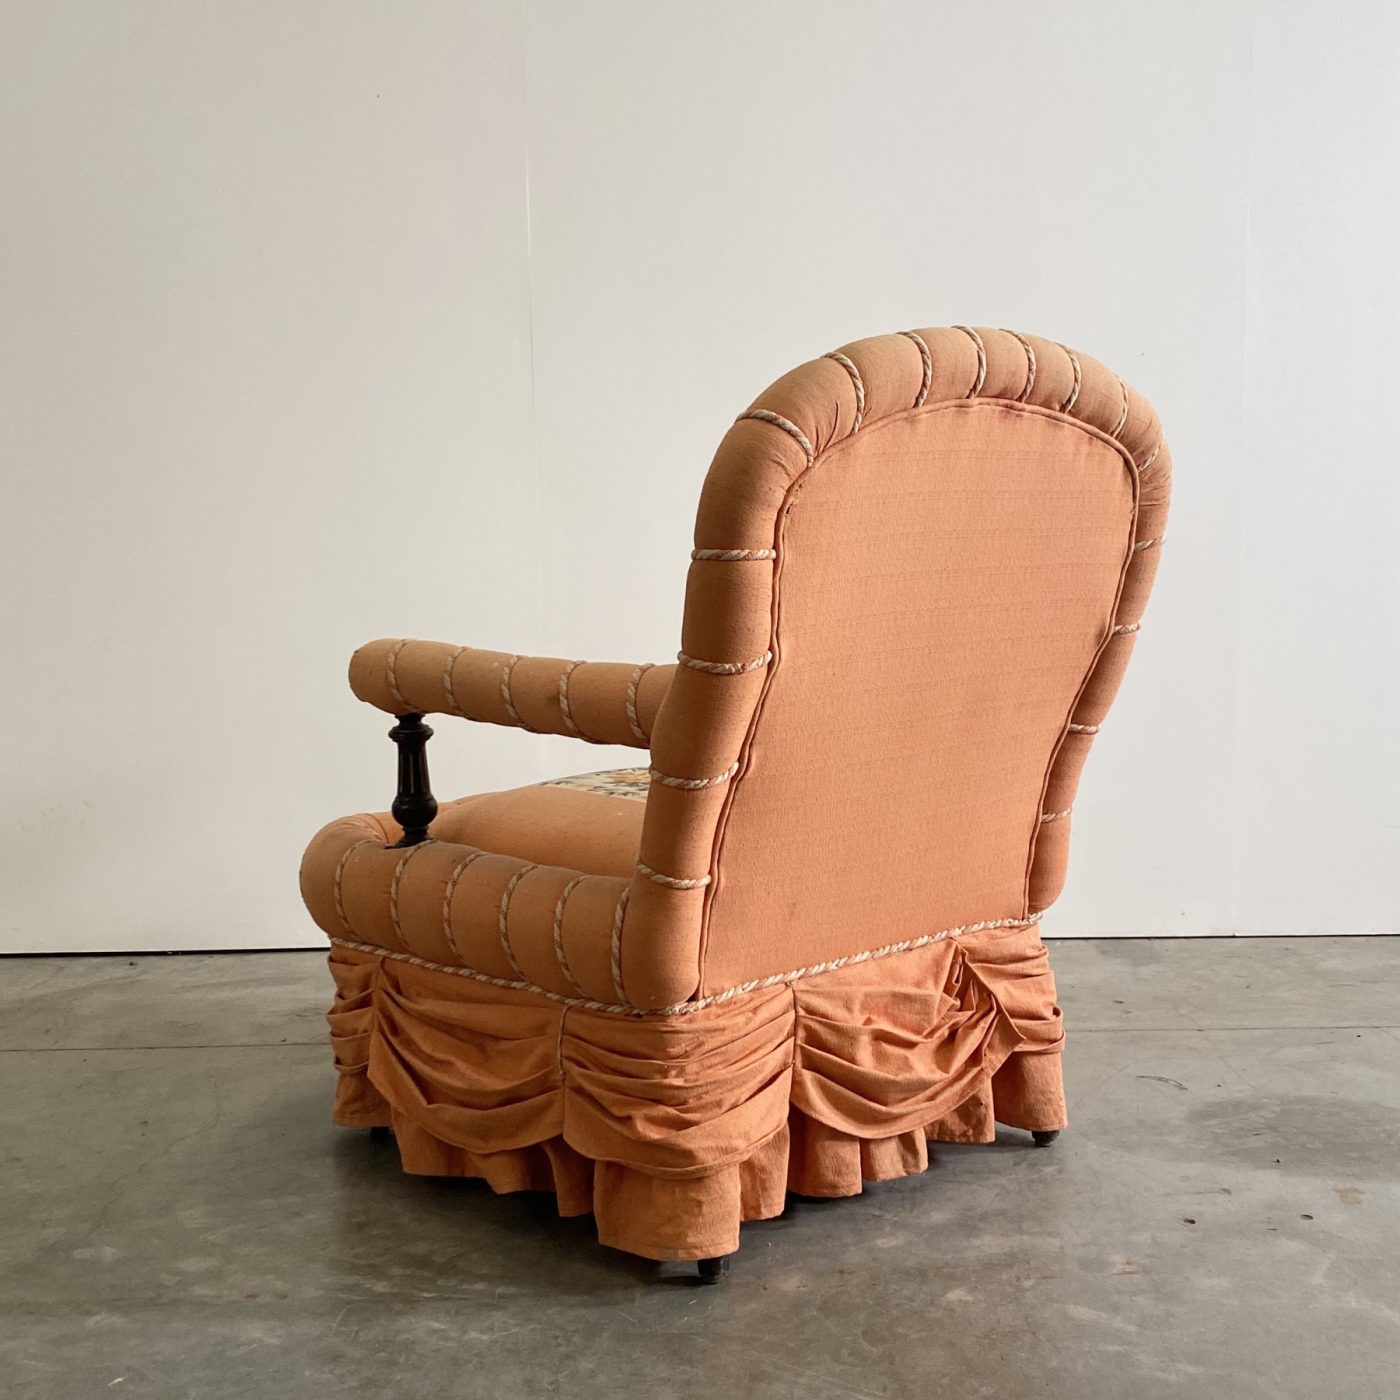 objet-vagabond-napoleon3-armchair0002